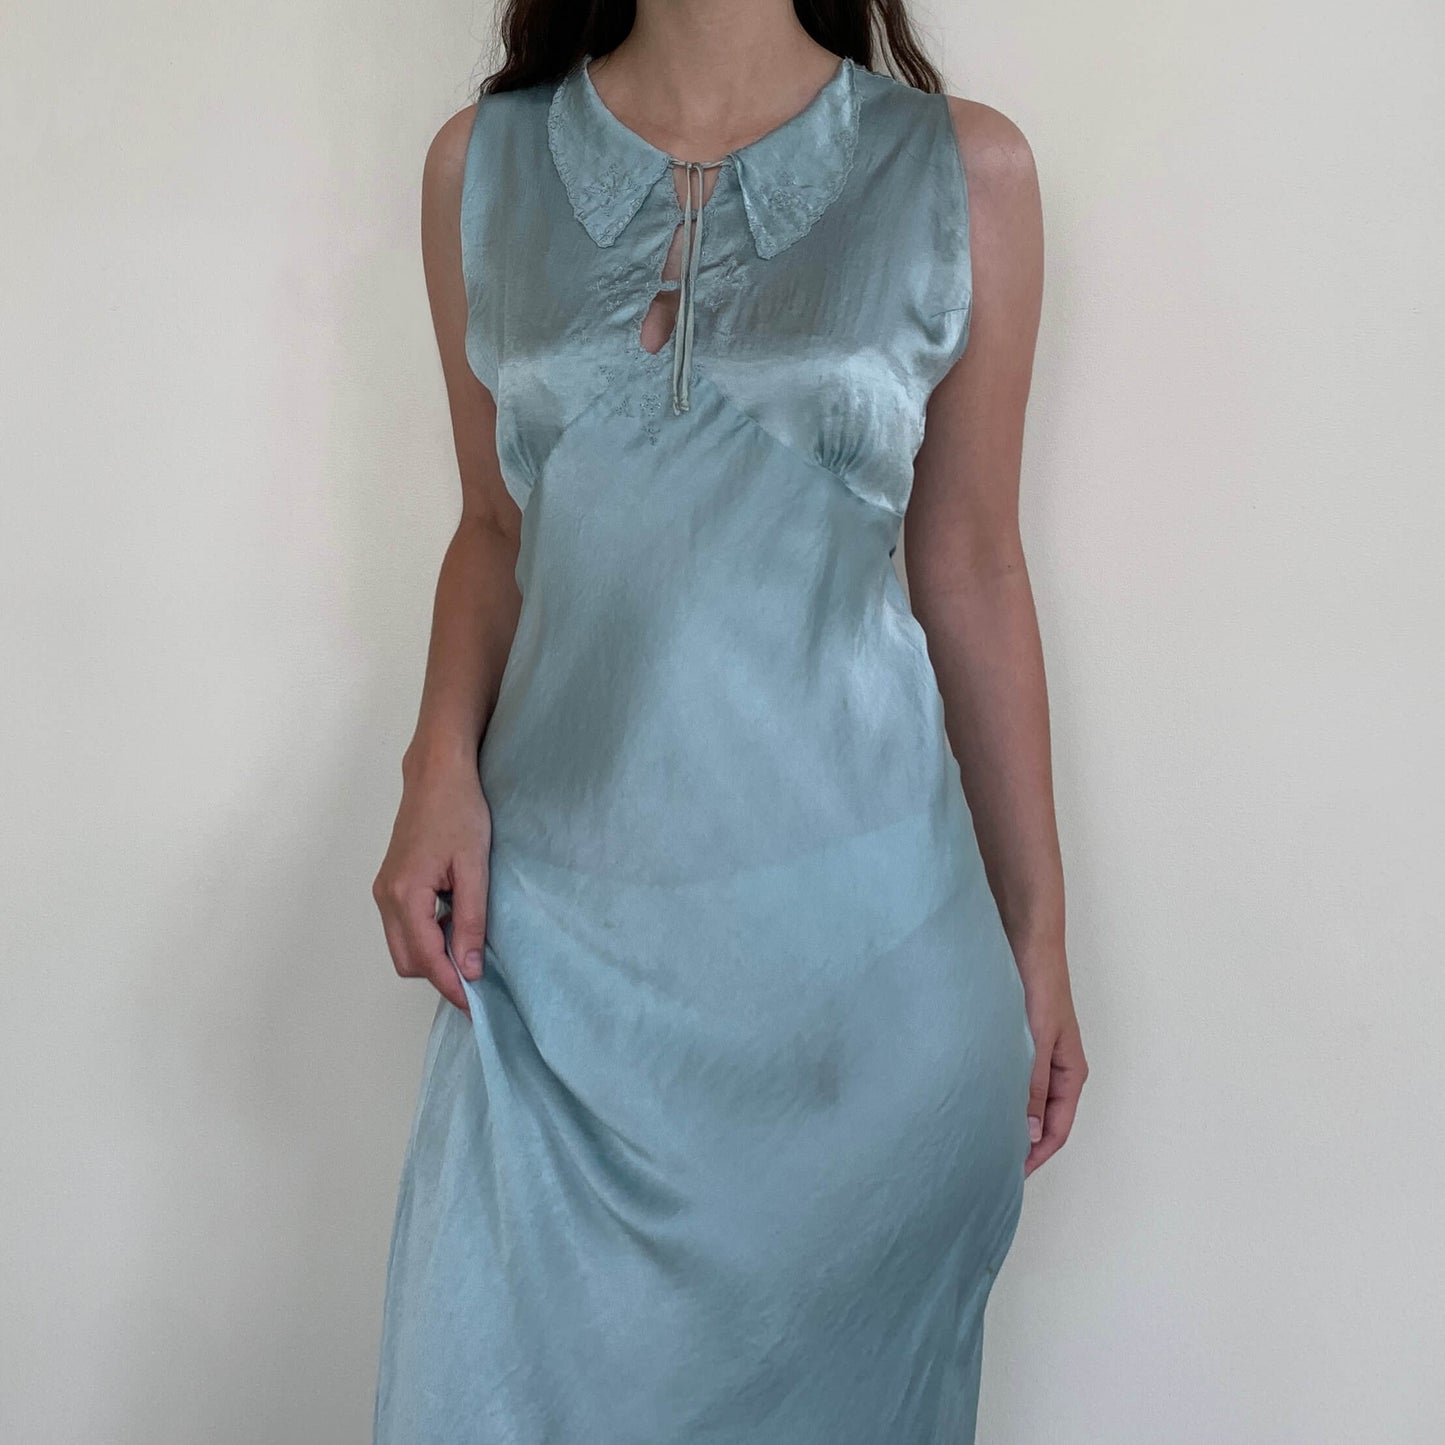 1930s bias cut dress in aqua blue silk on a model